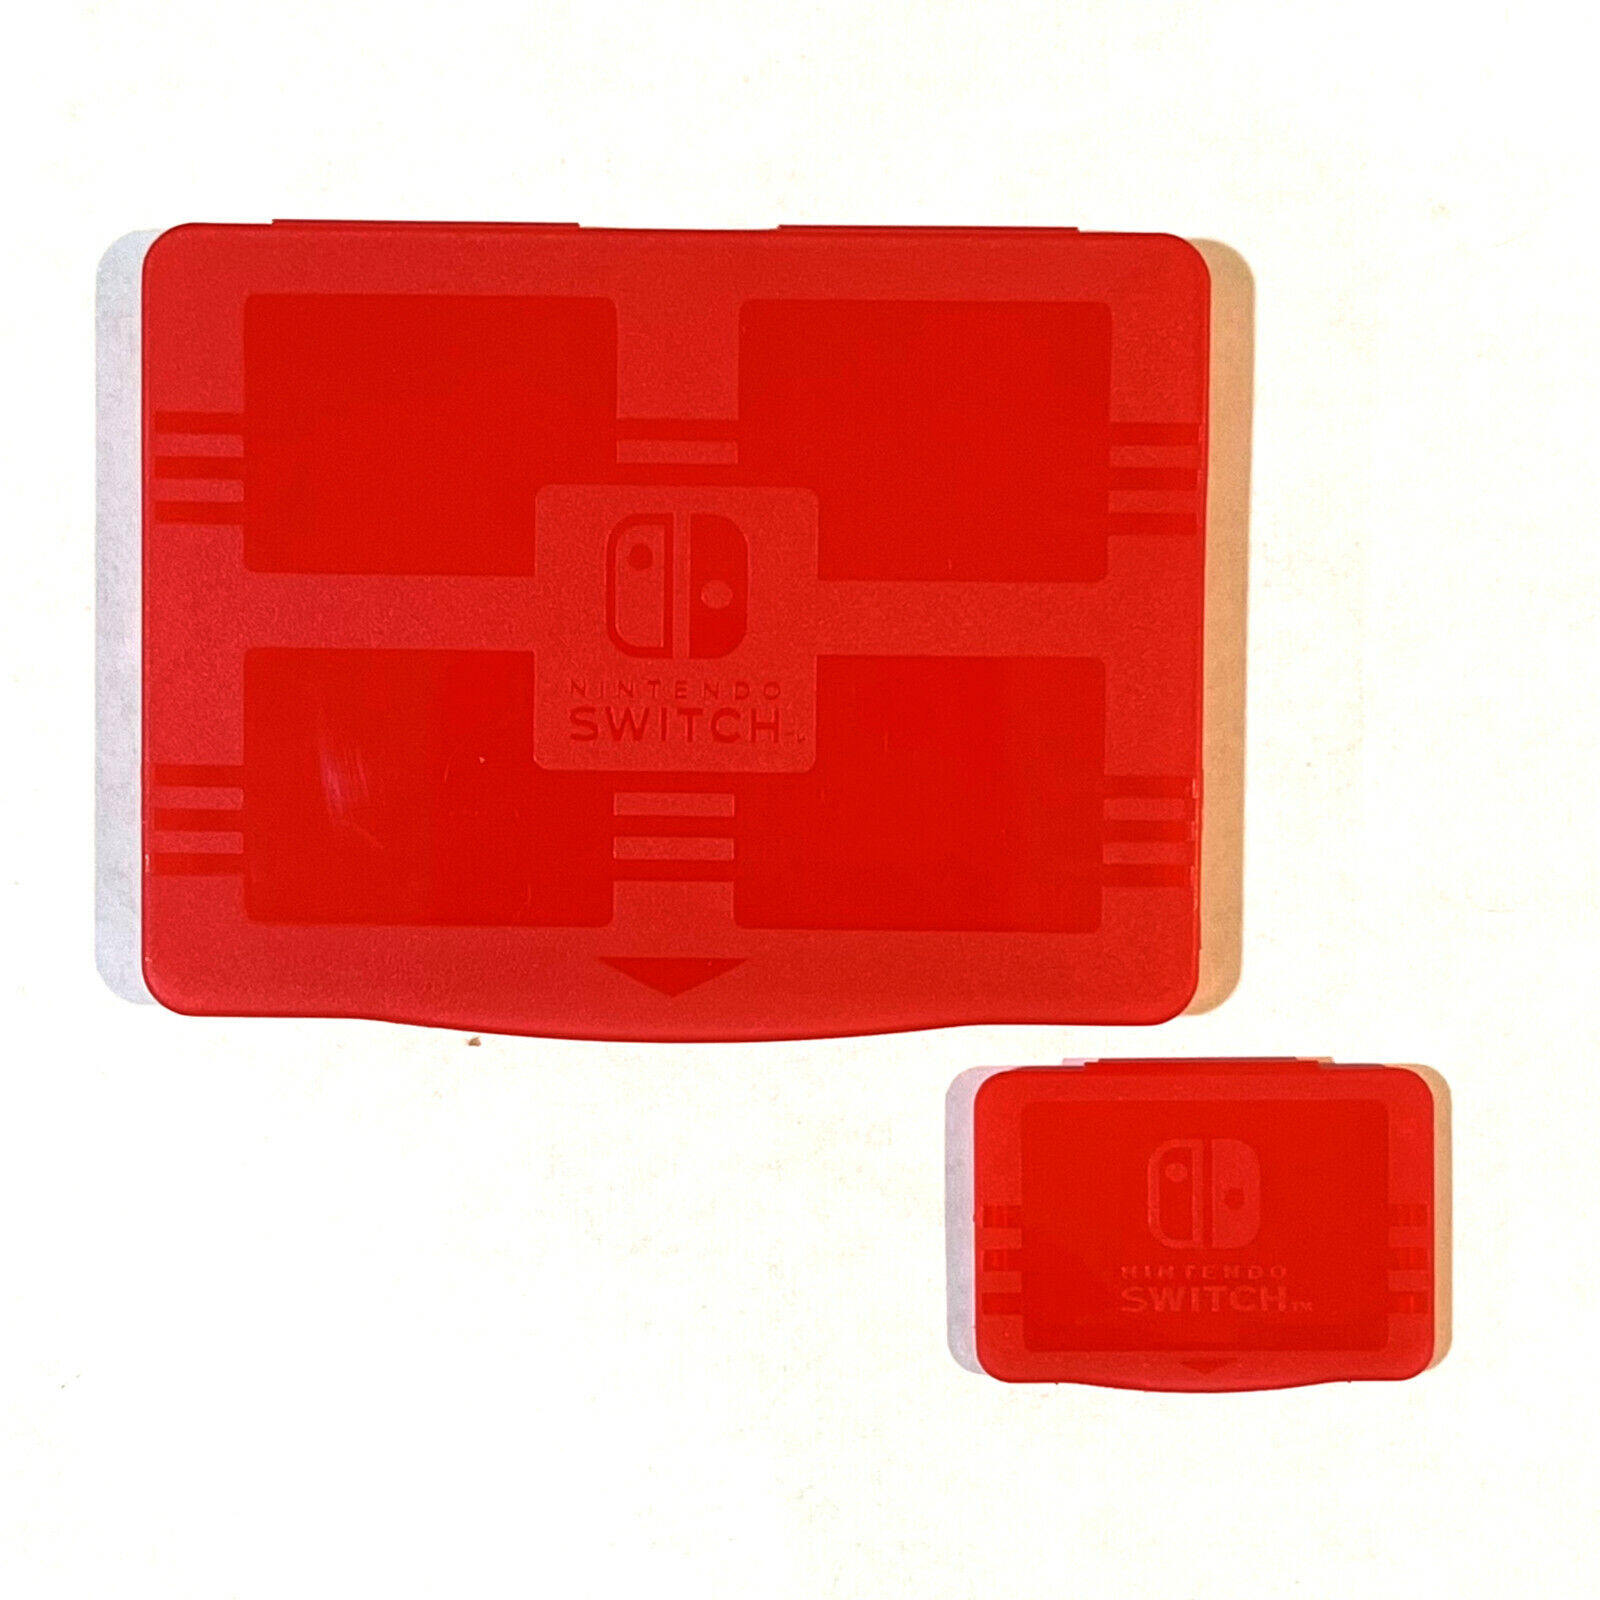 Nintendo Switch Case 4 Game Cartridge Holder